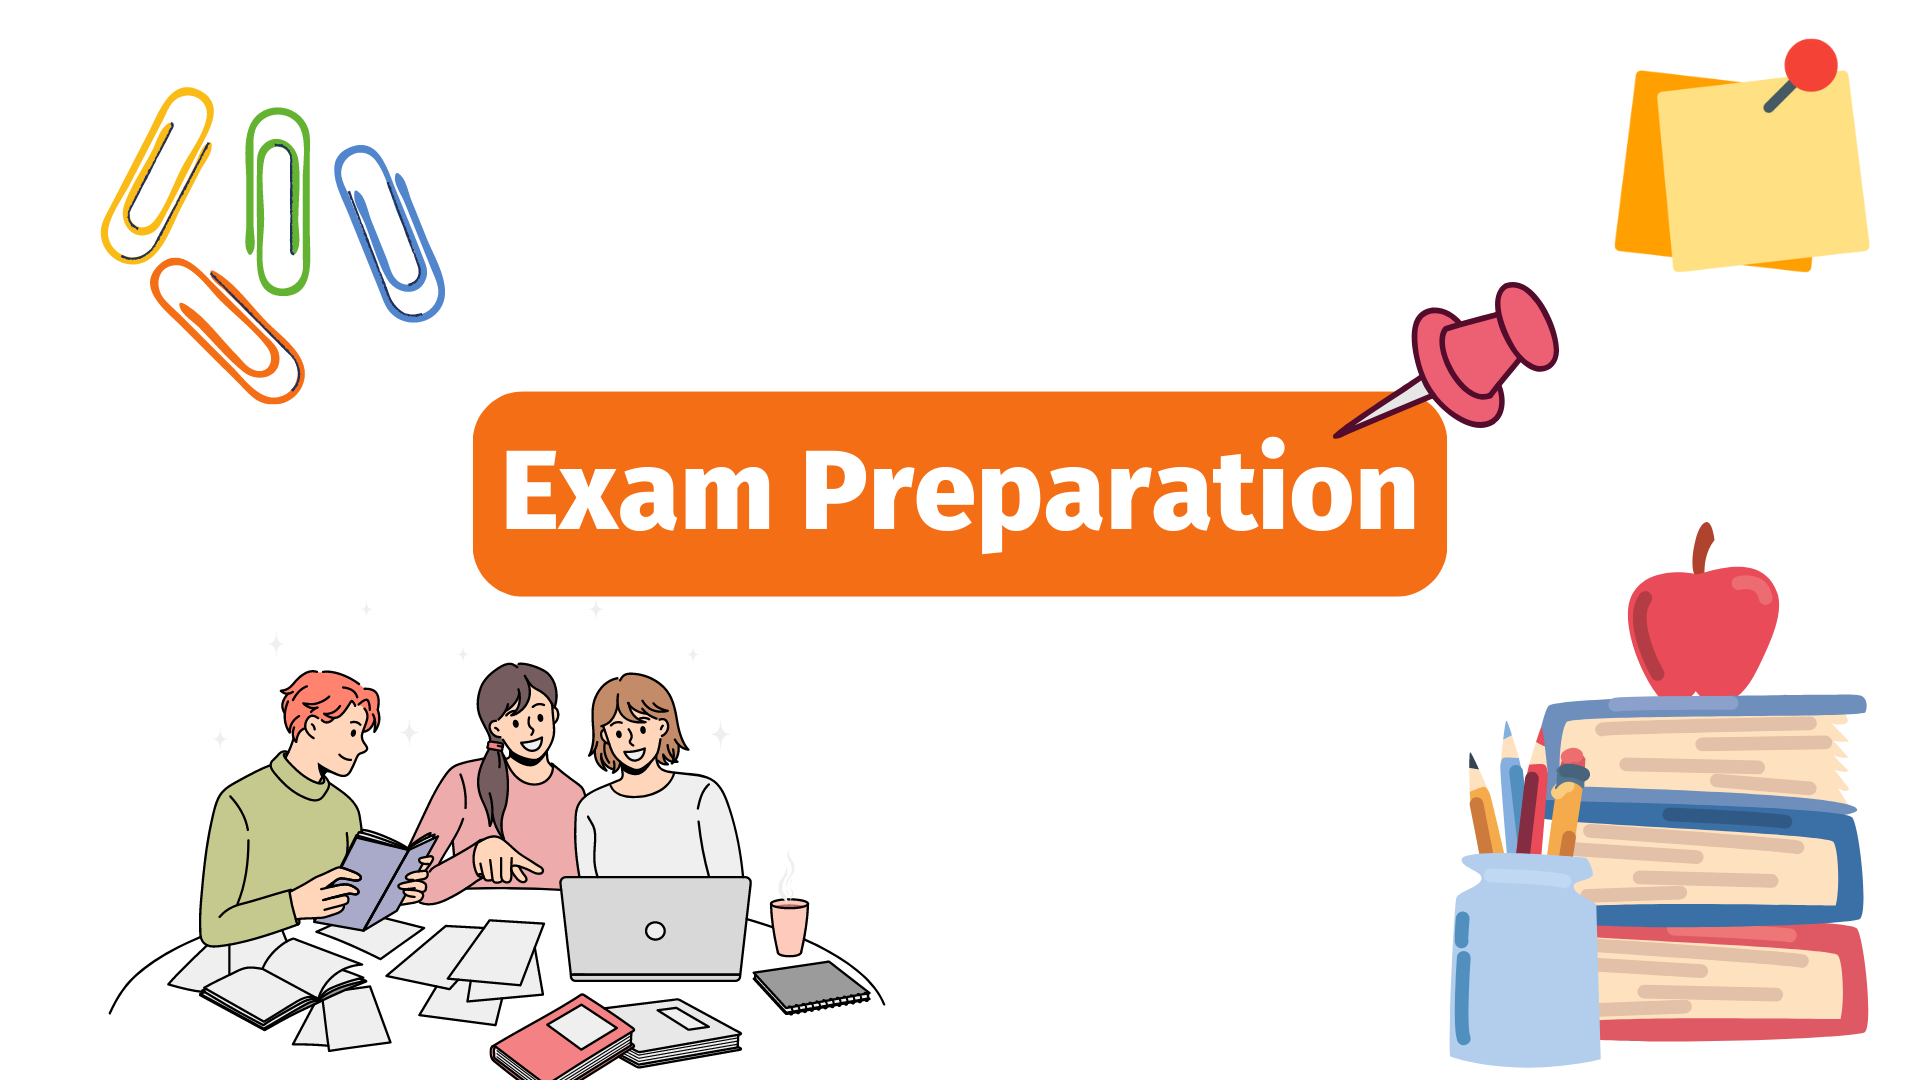 Exam preparation